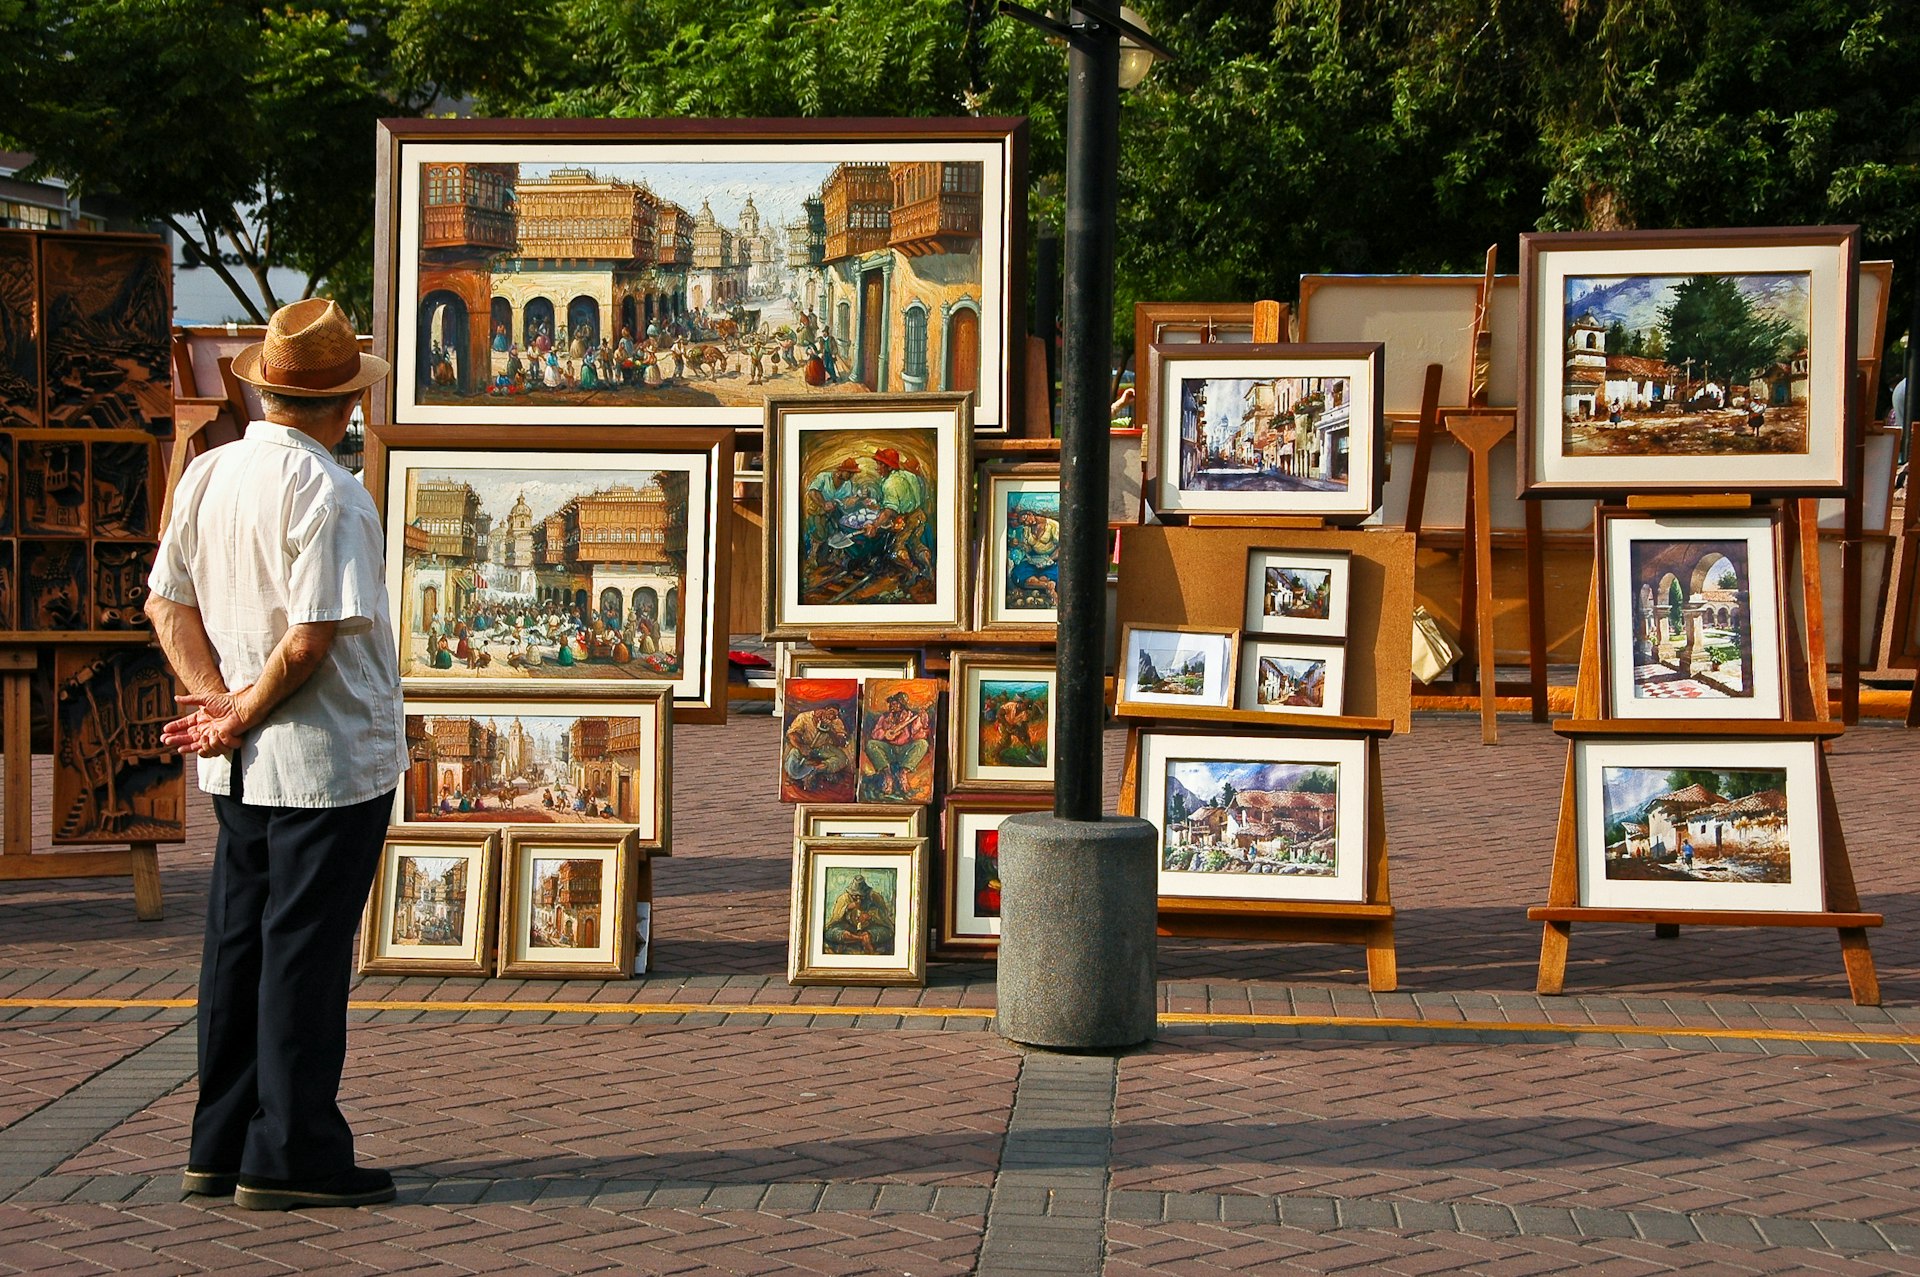 A man observes art on display in a public park, Lima, Peru